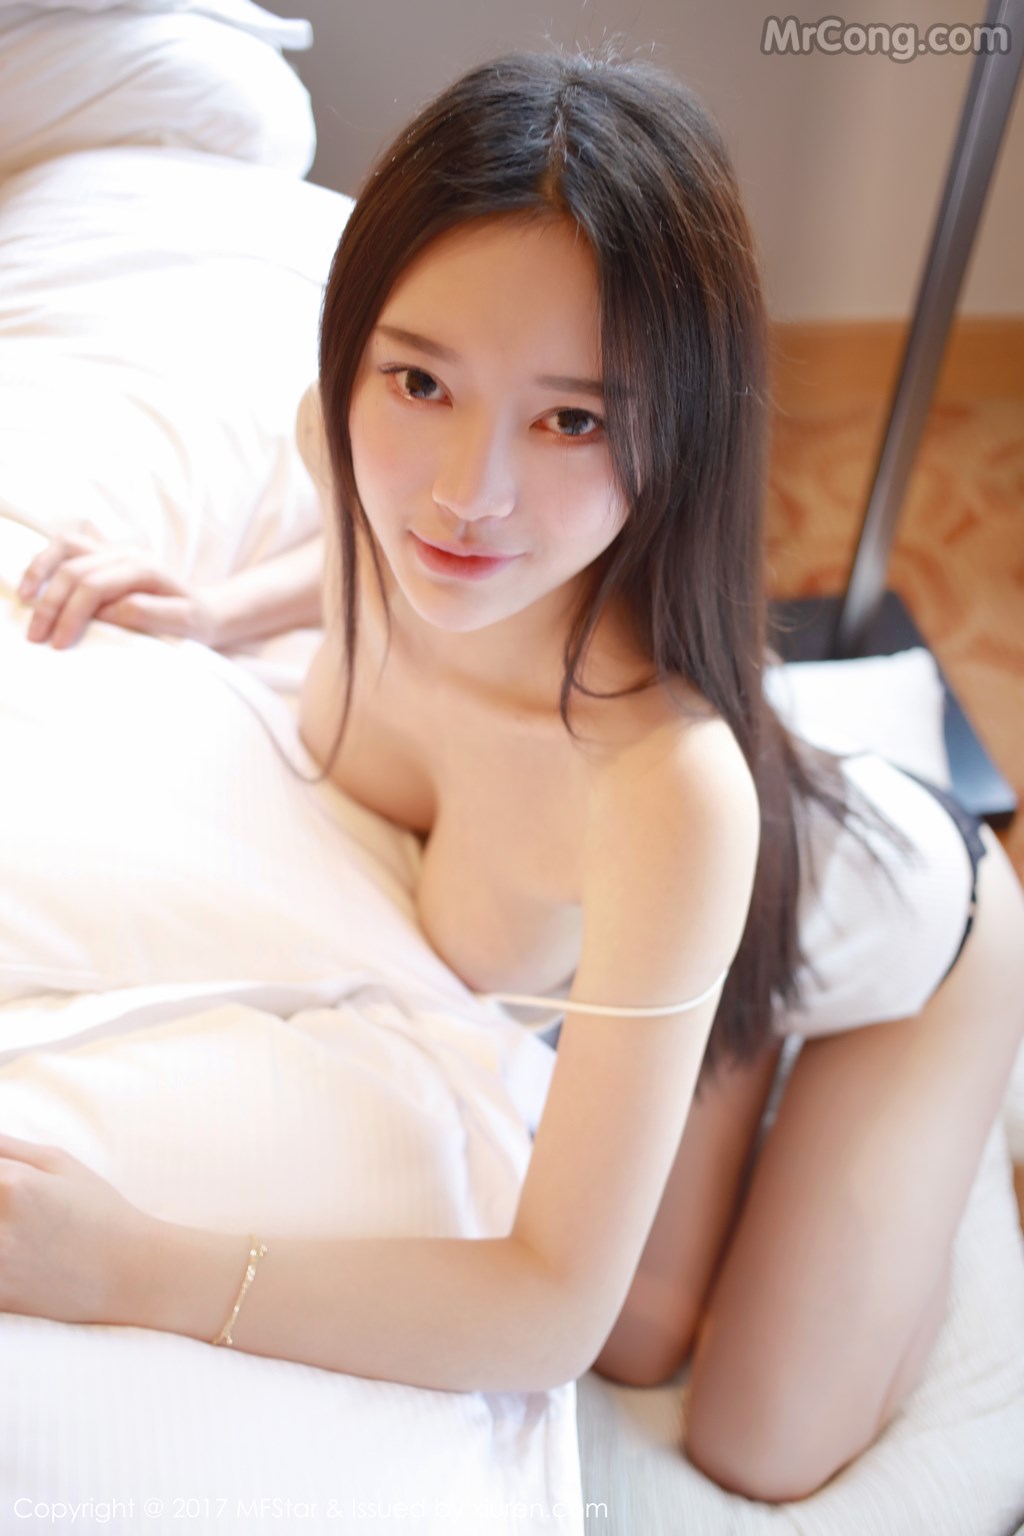 MFStar Vol.087: Model Tang Qi Er (唐琪 儿 Beauty) (62 photos)